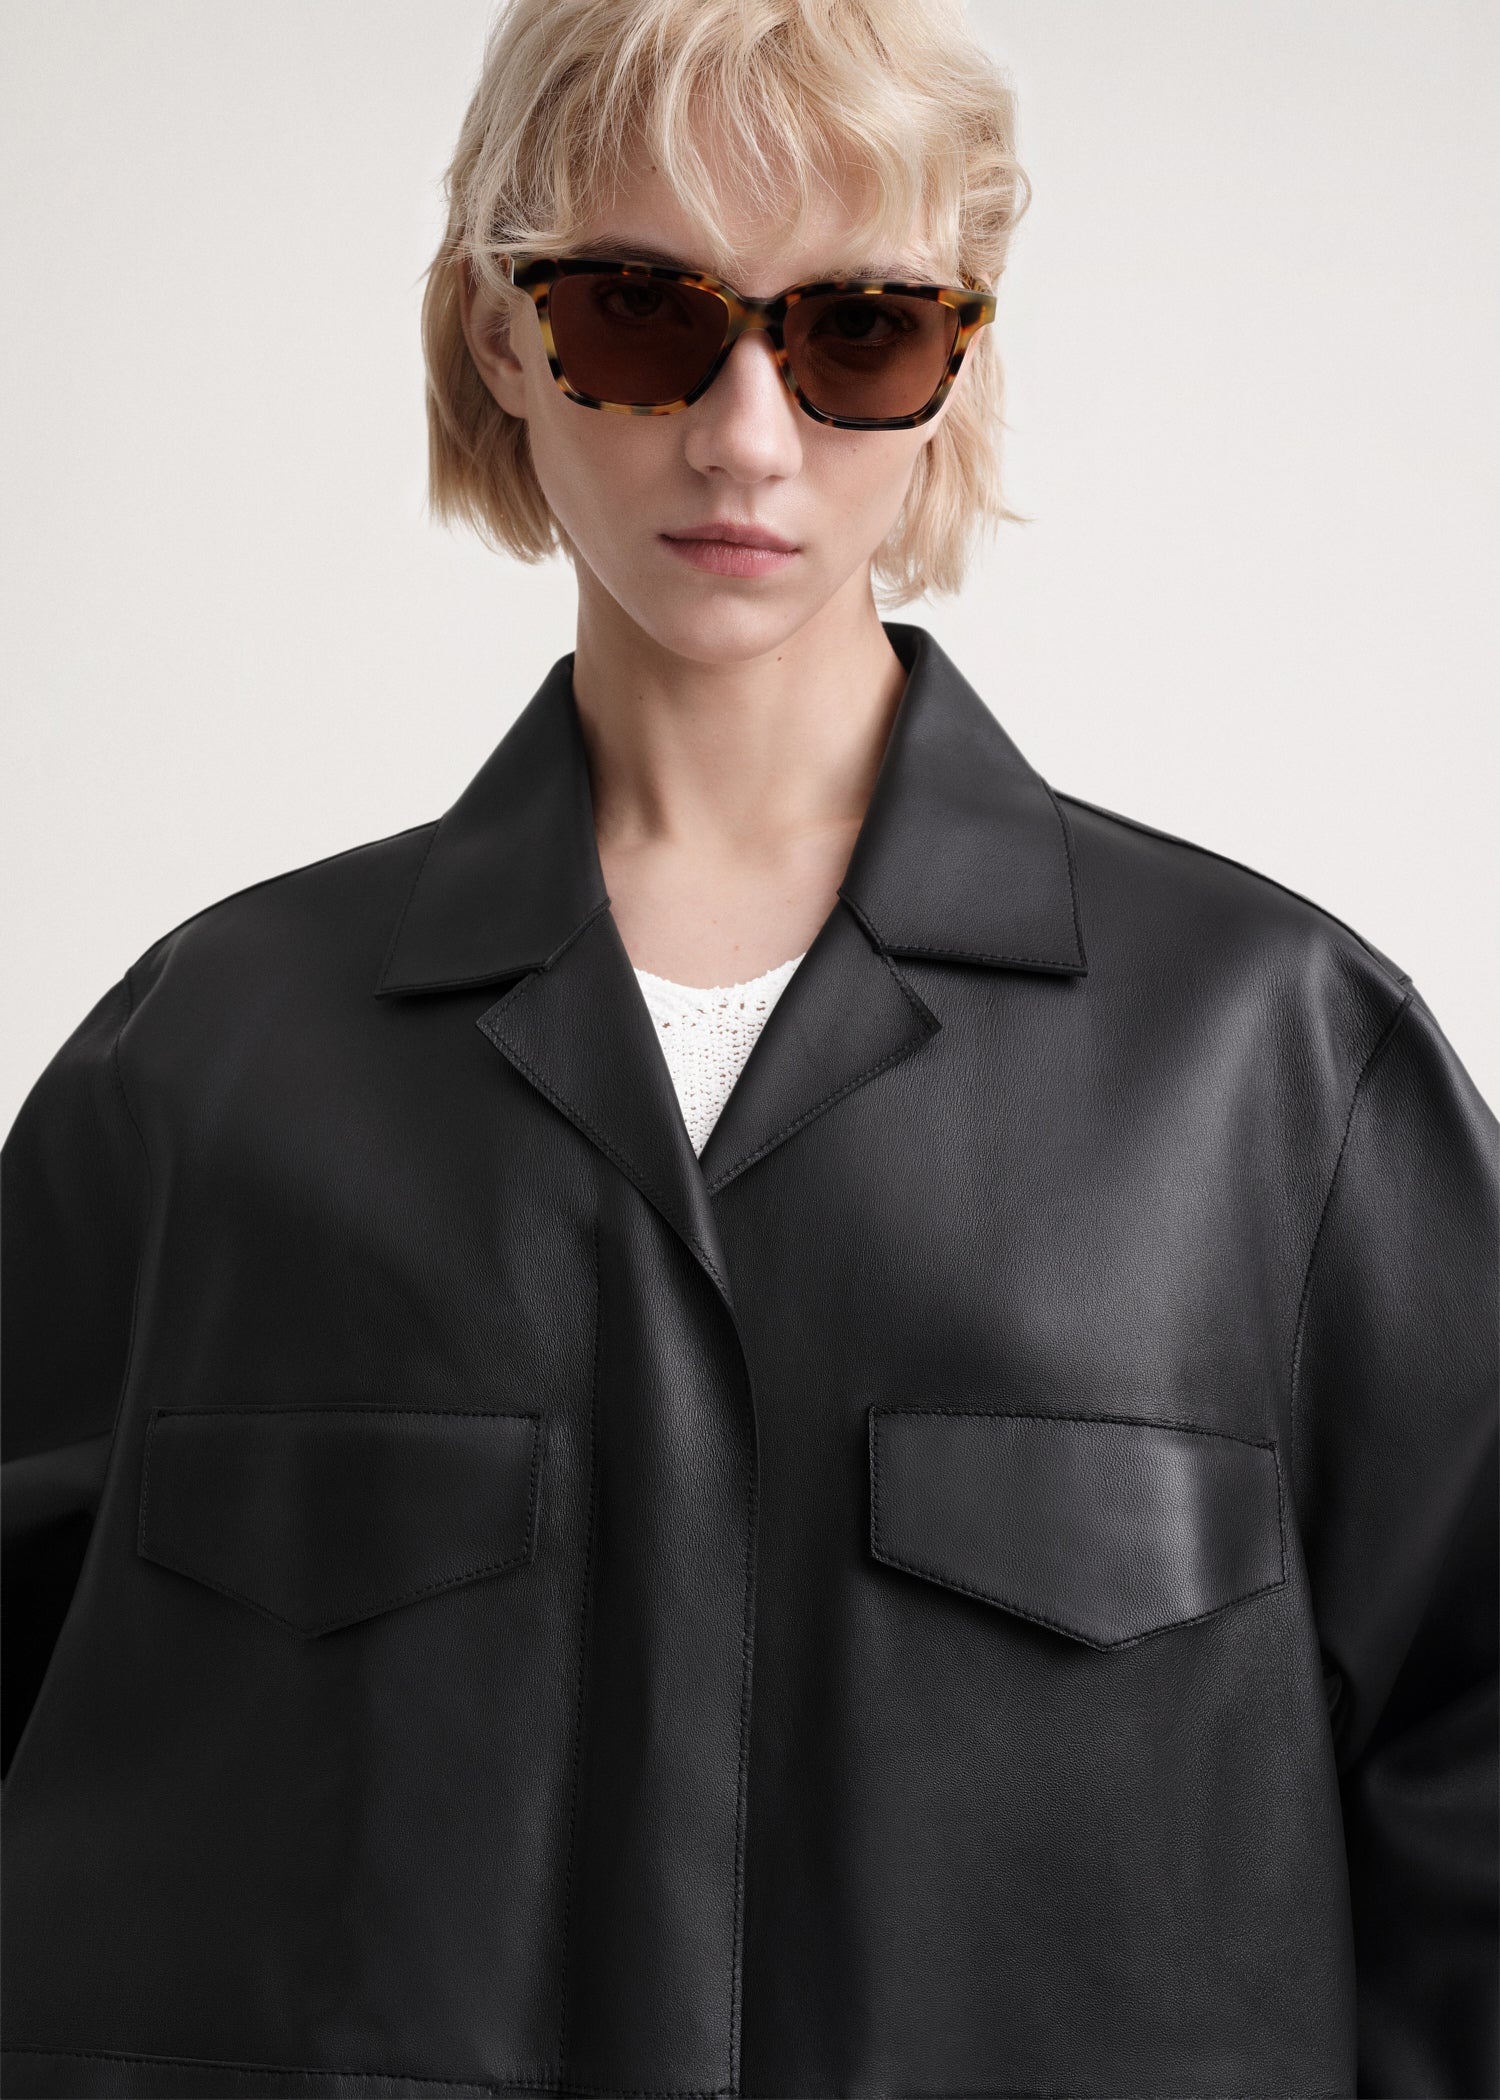 Army leather jacket black - 5